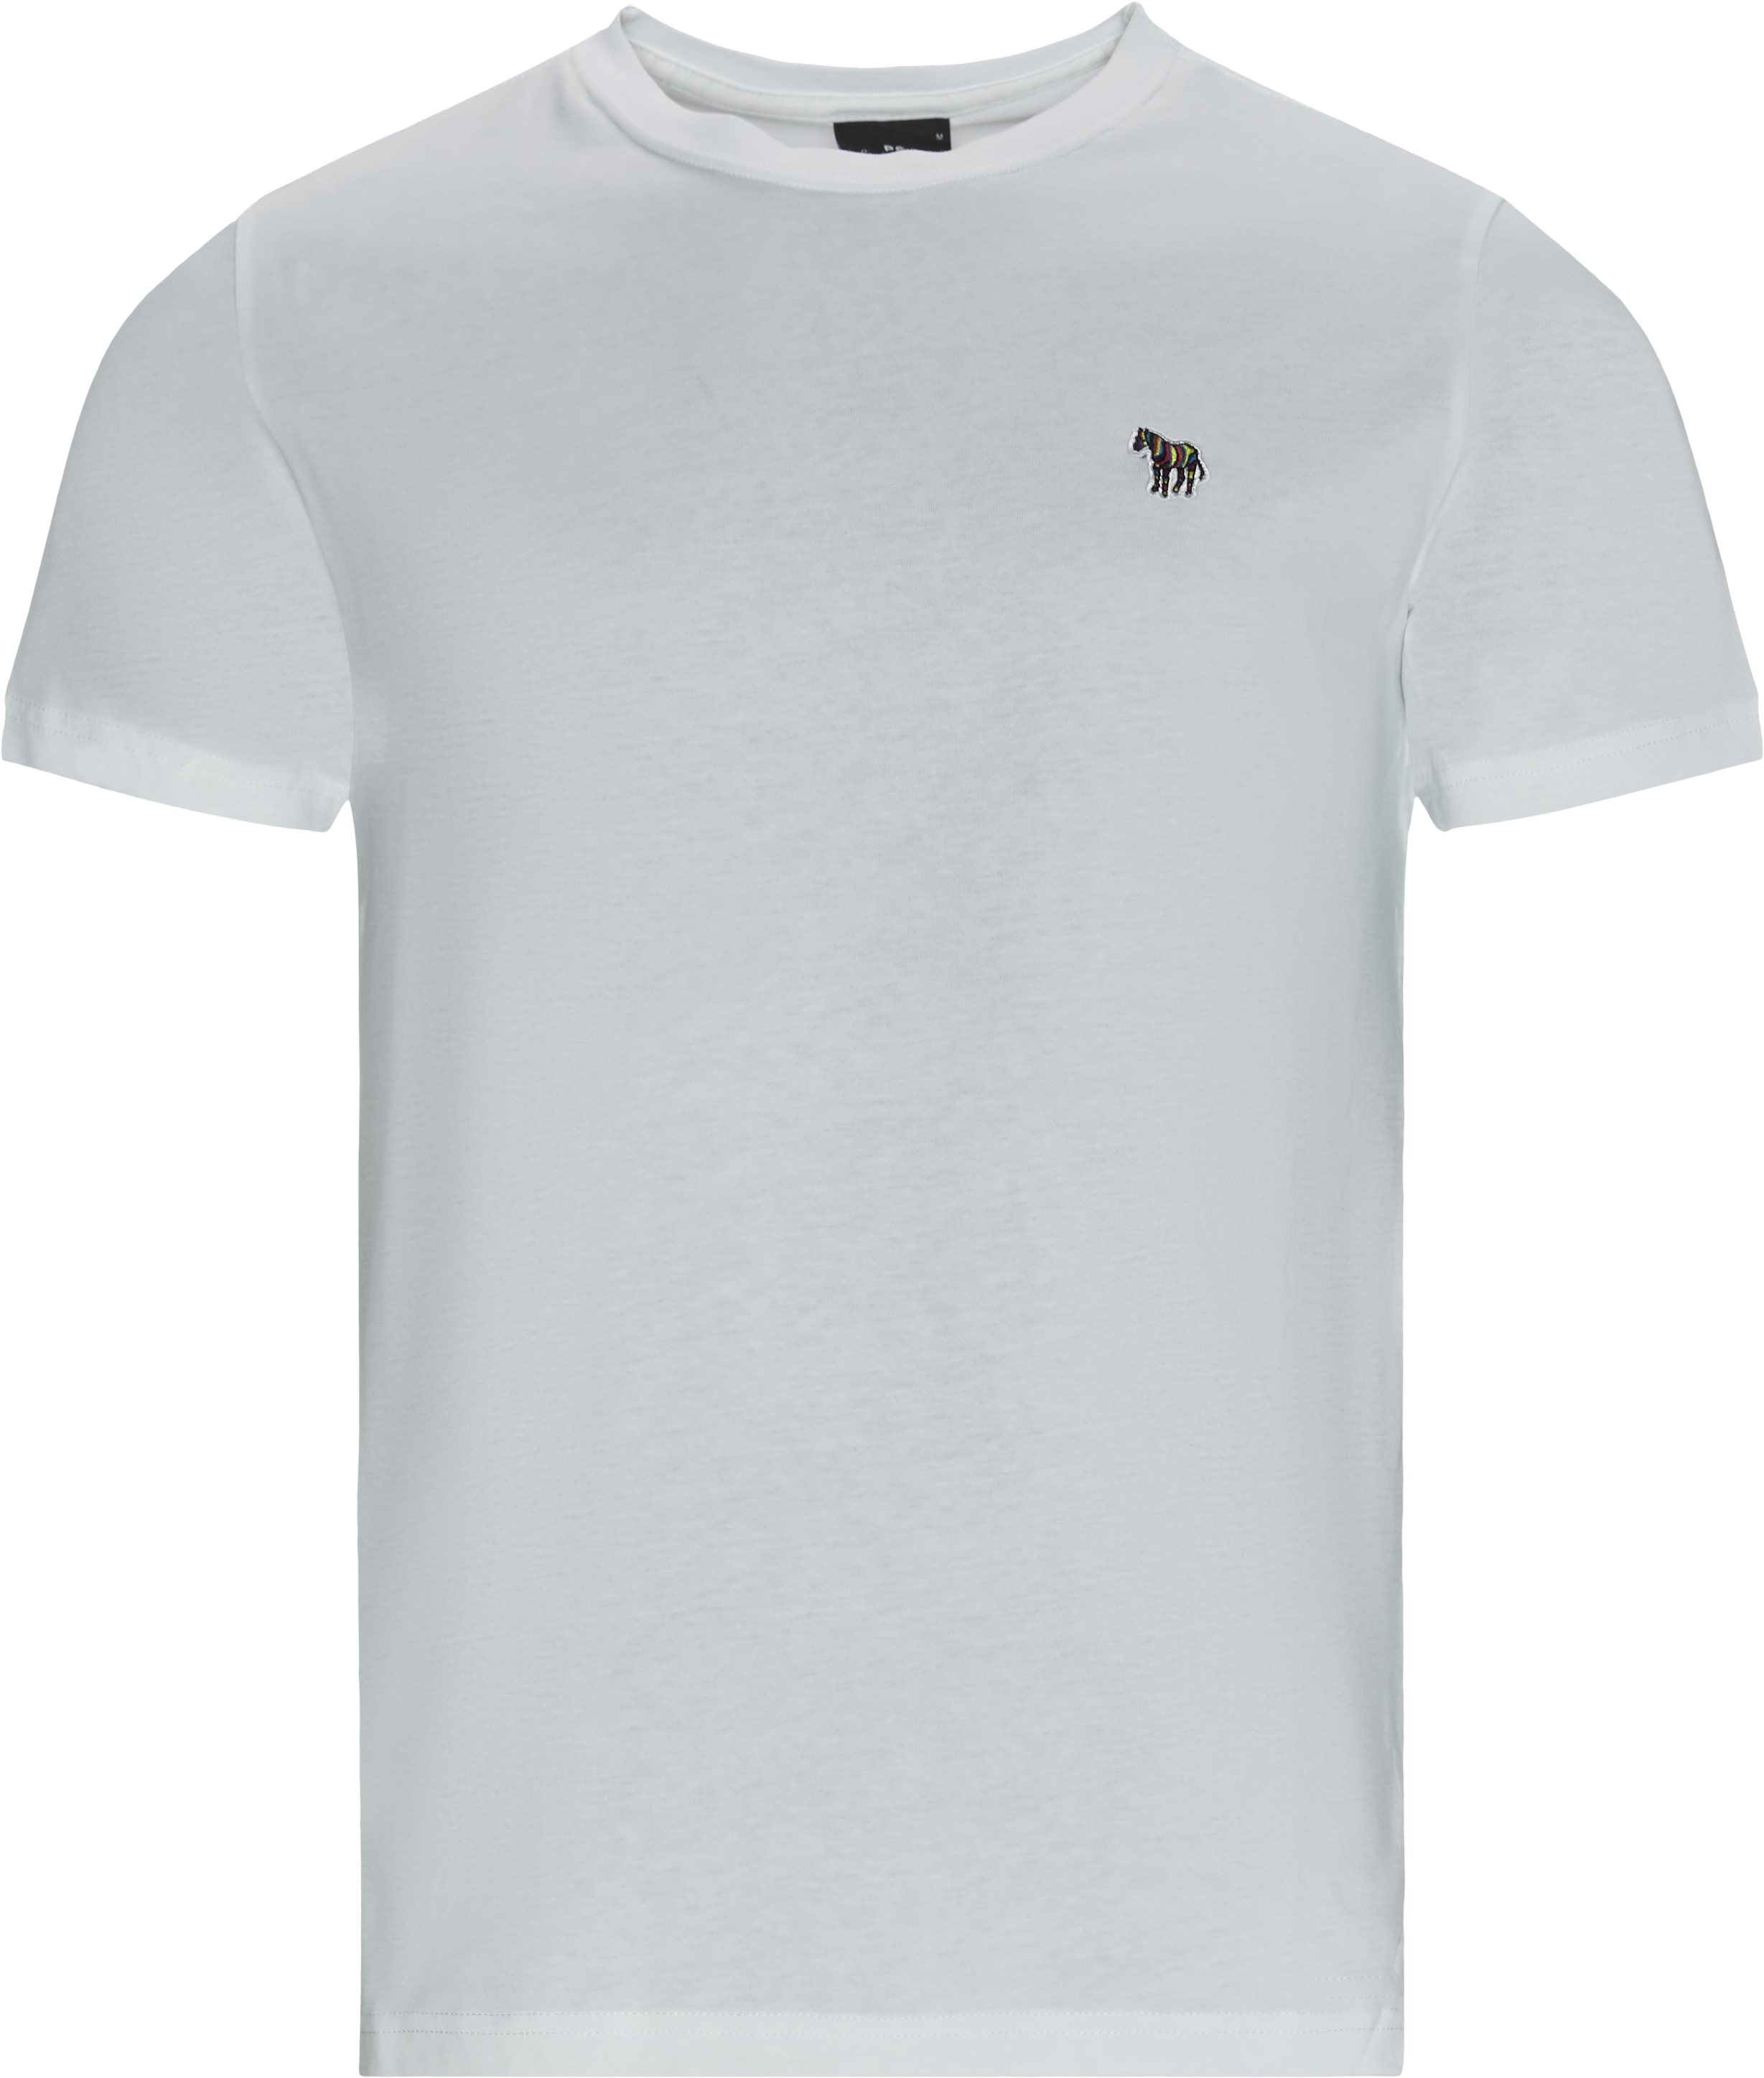 T-shirts - Regular fit - Hvid